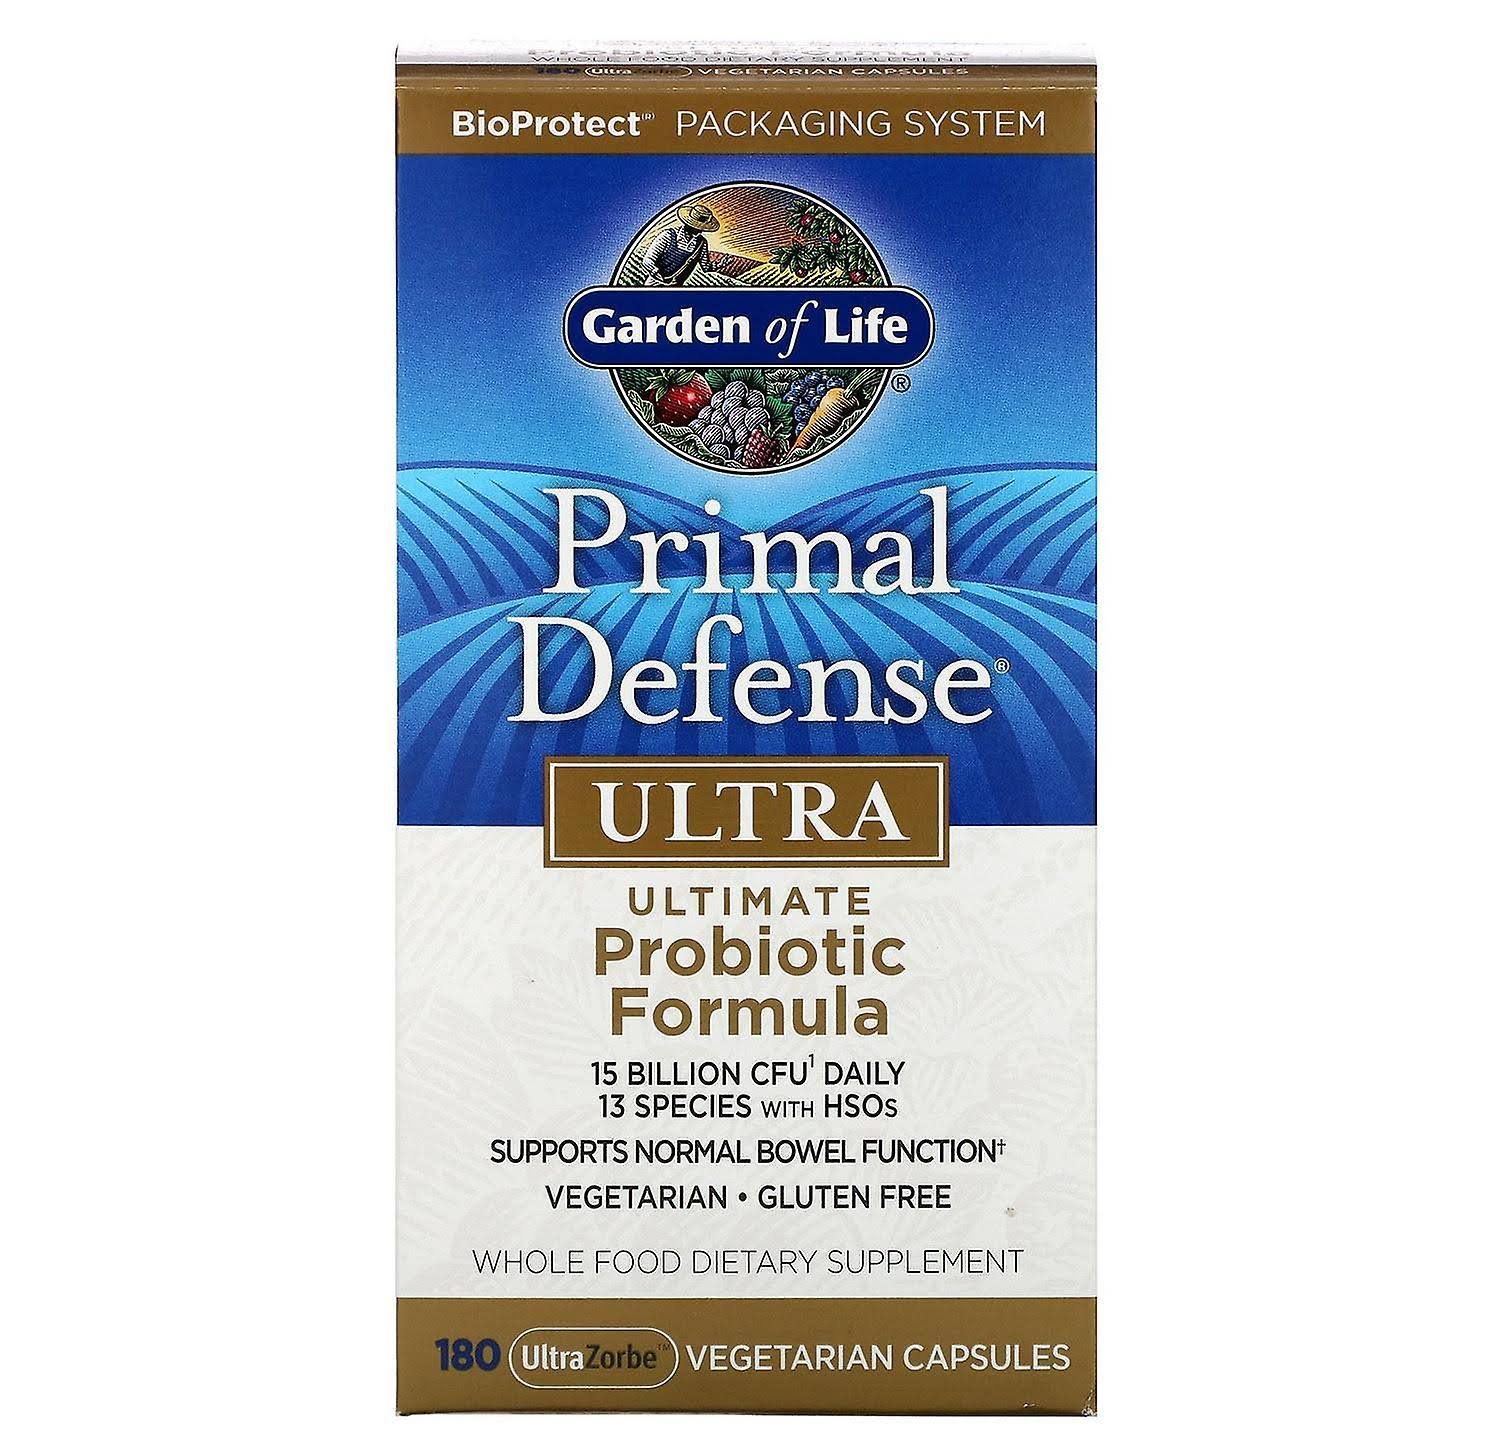 Garden of Life Primal Defense Ultra Ultimate Probiotic Formula Dietary Supplement - 180 Capsules